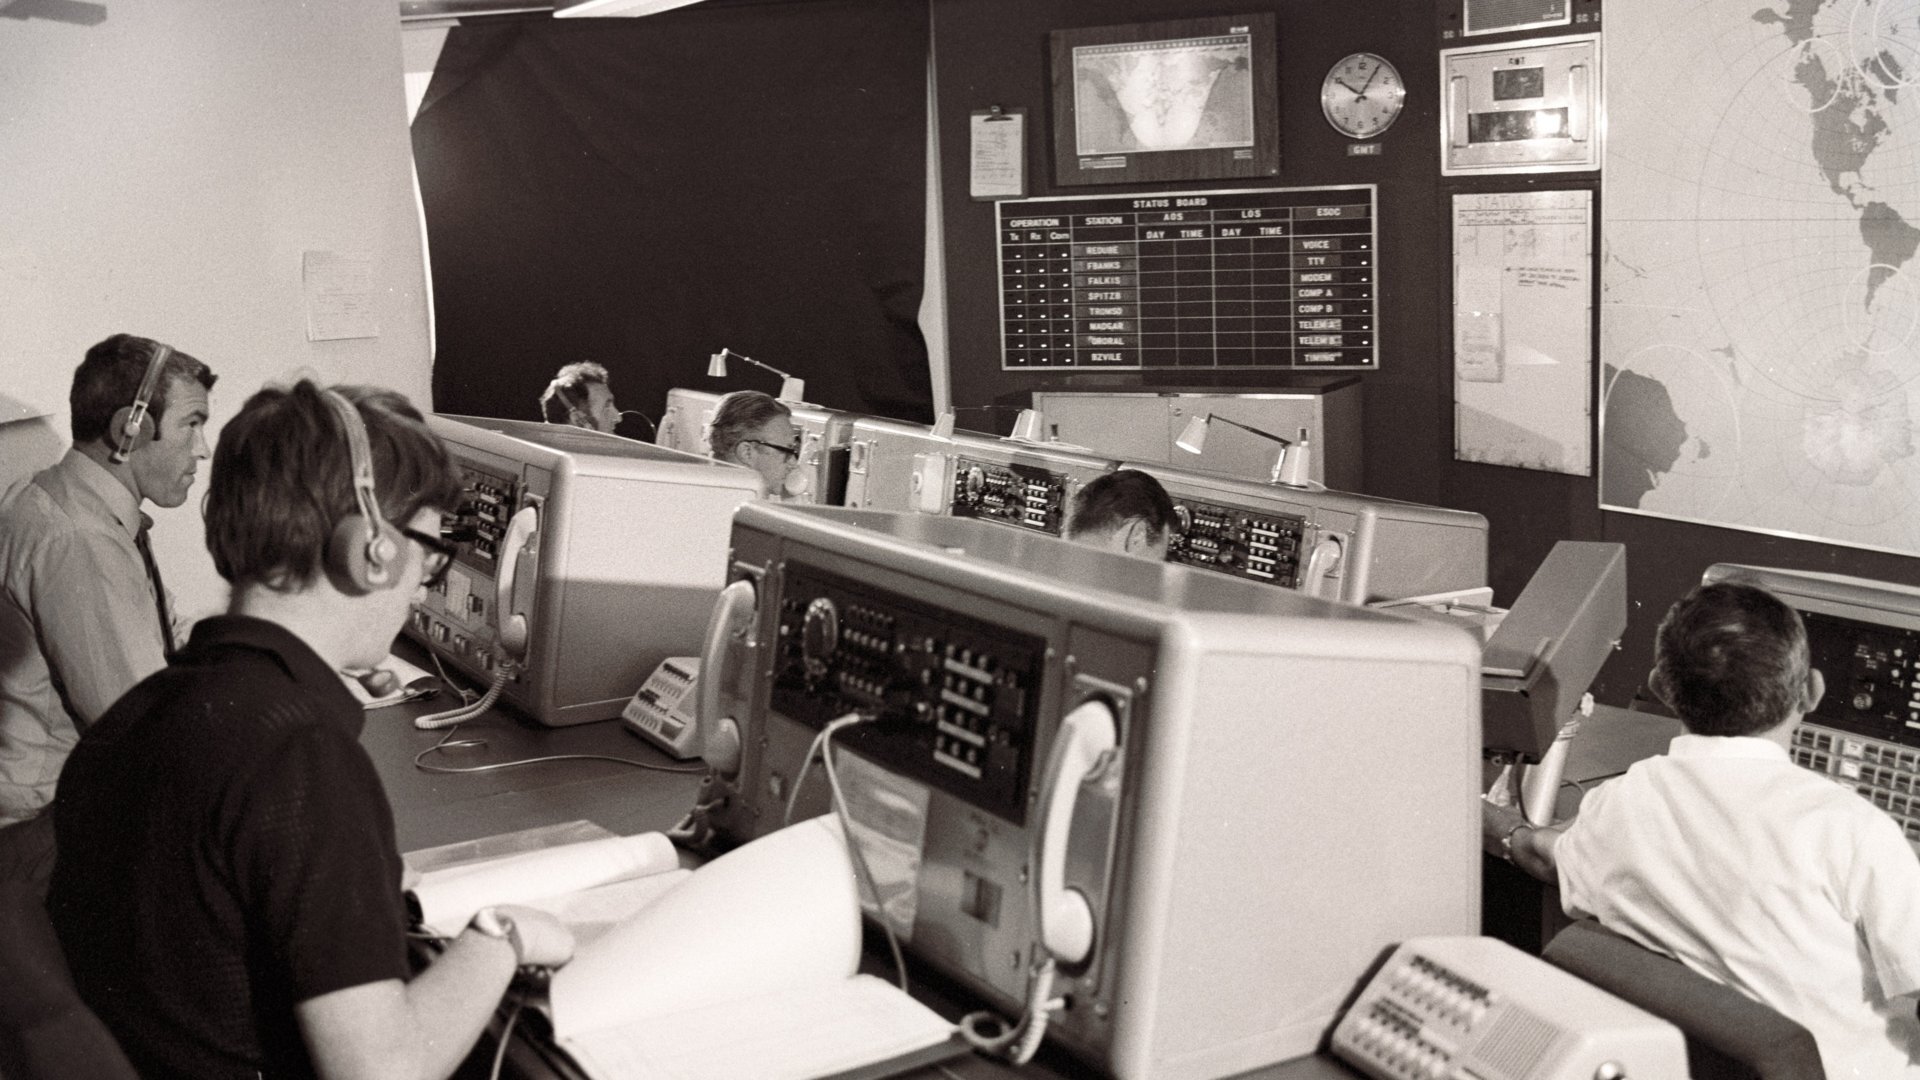 Control room at ESOC